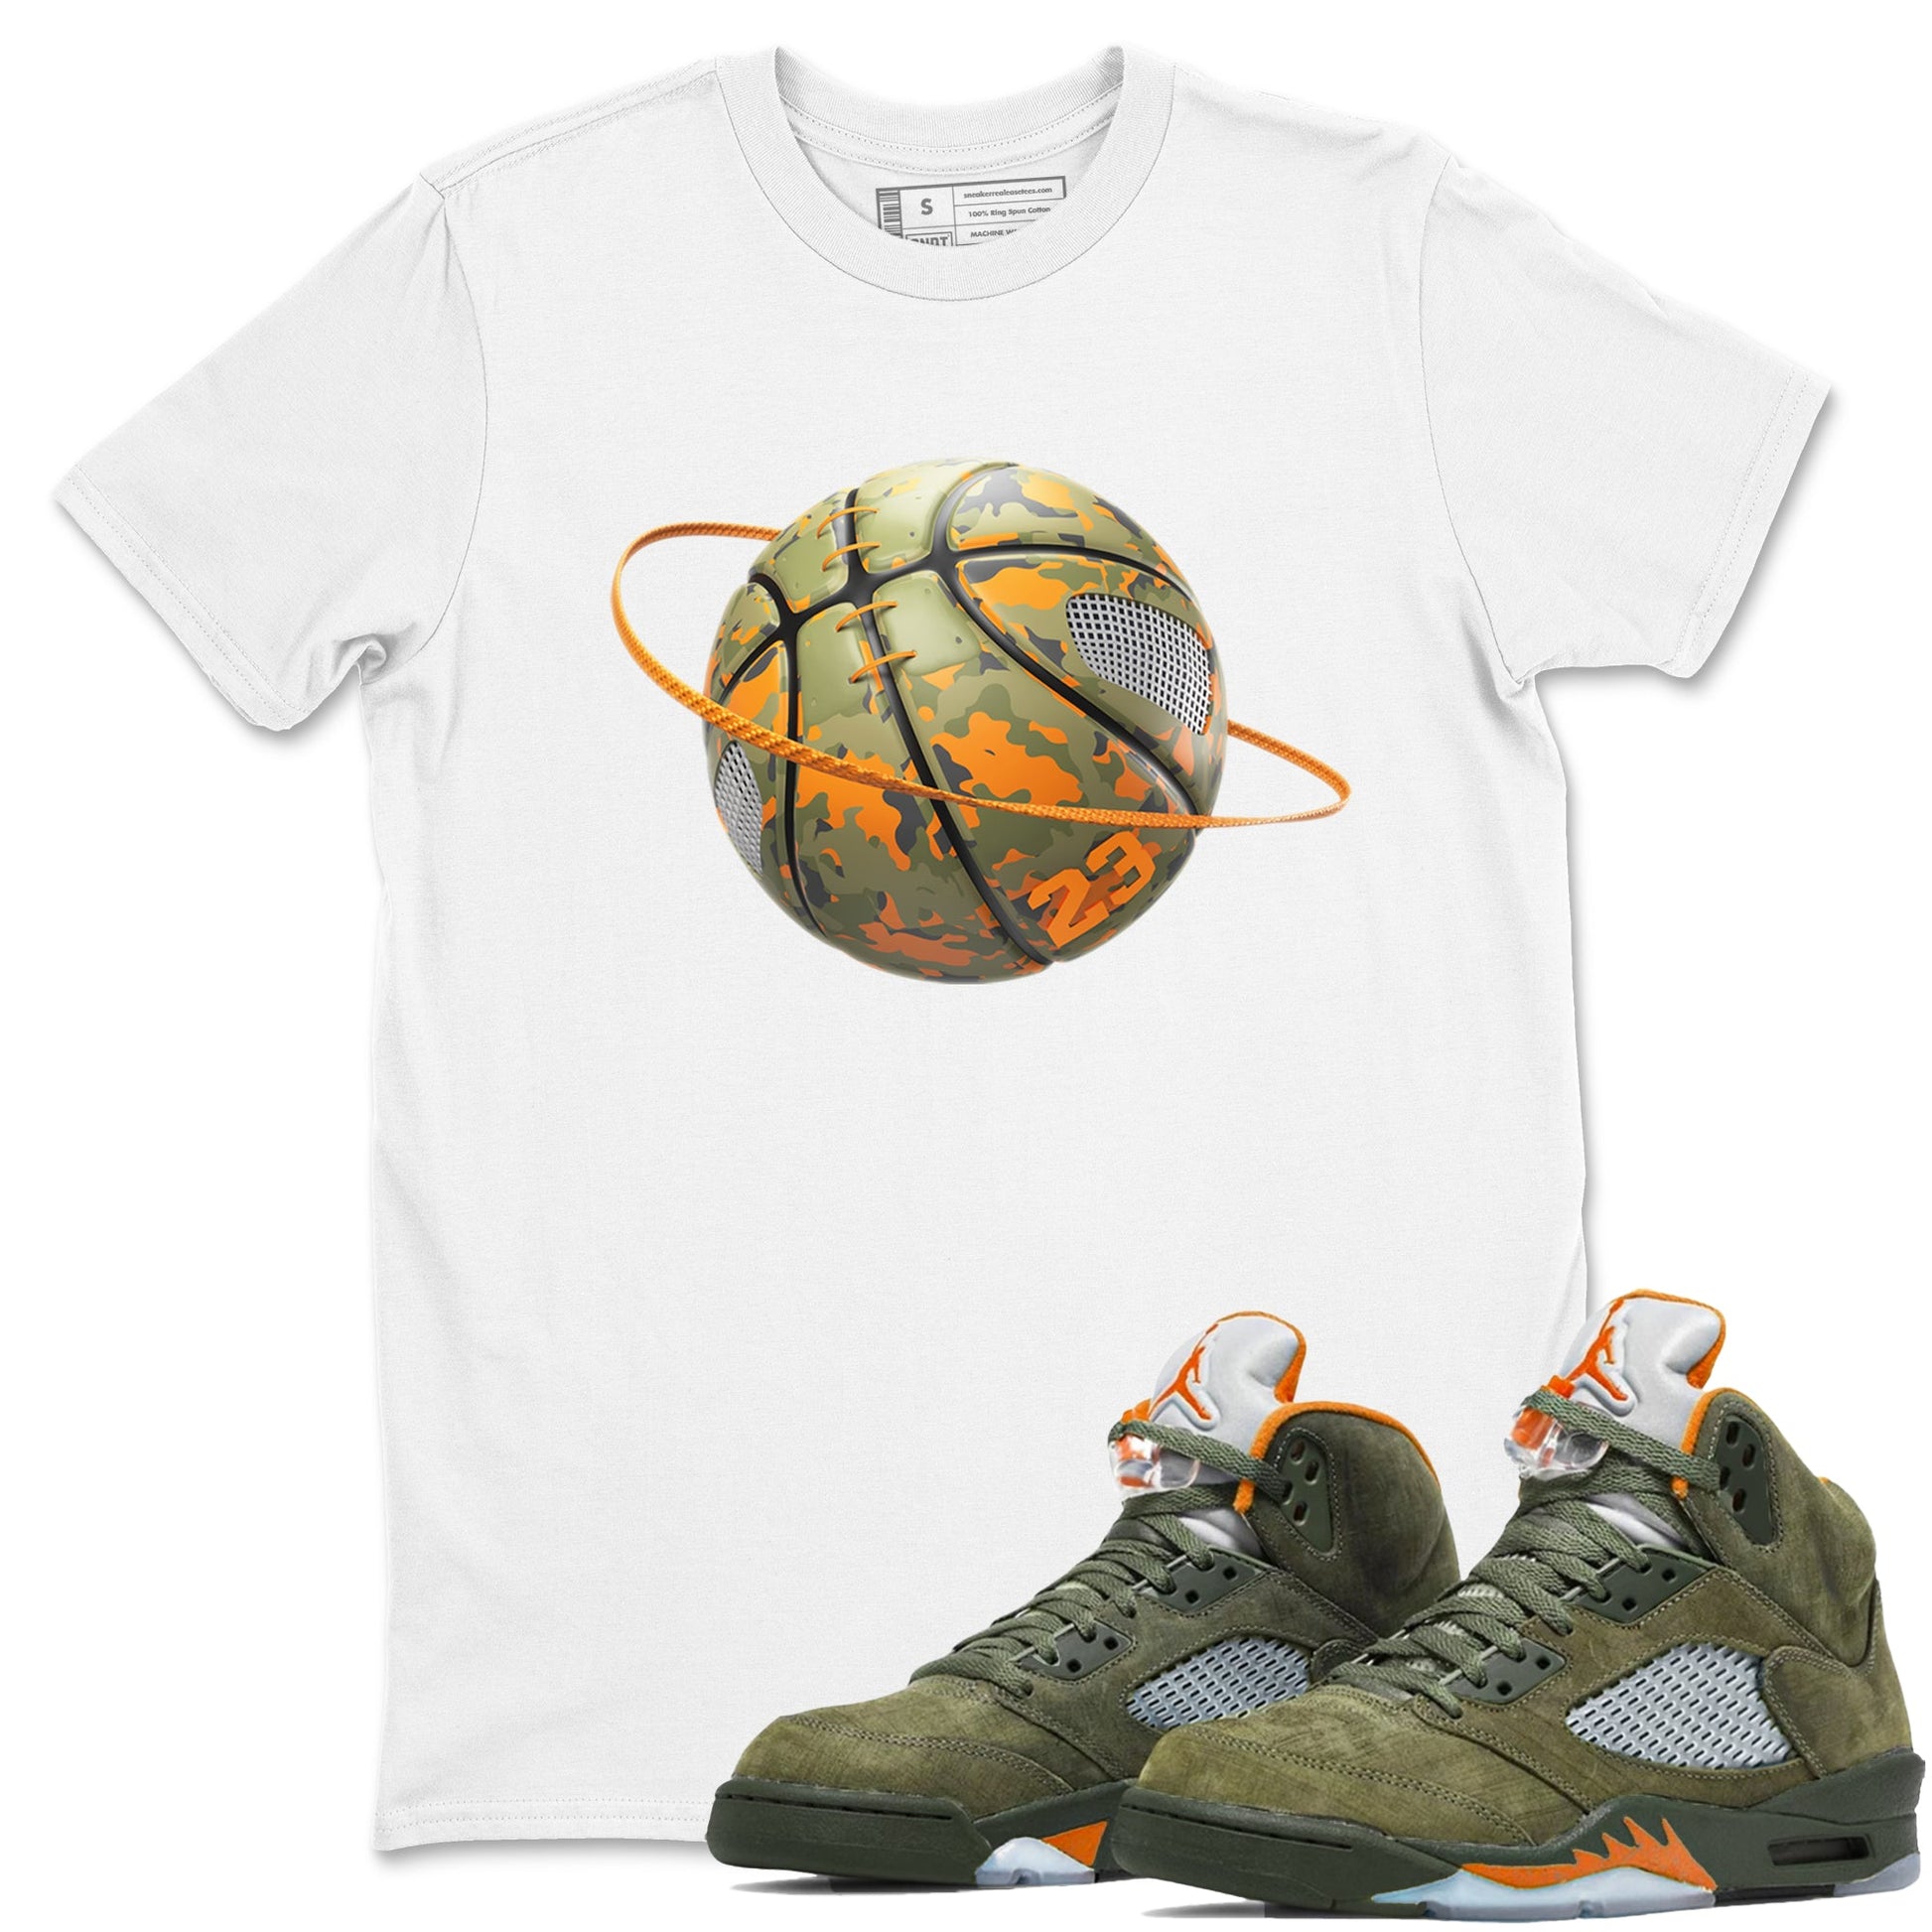 5s Olive shirt to match jordans Camo Basketball Planet sneaker tees Air Jordan 5 Olive SNRT Sneaker Release Tees unisex cotton White 1 crew neck shirt